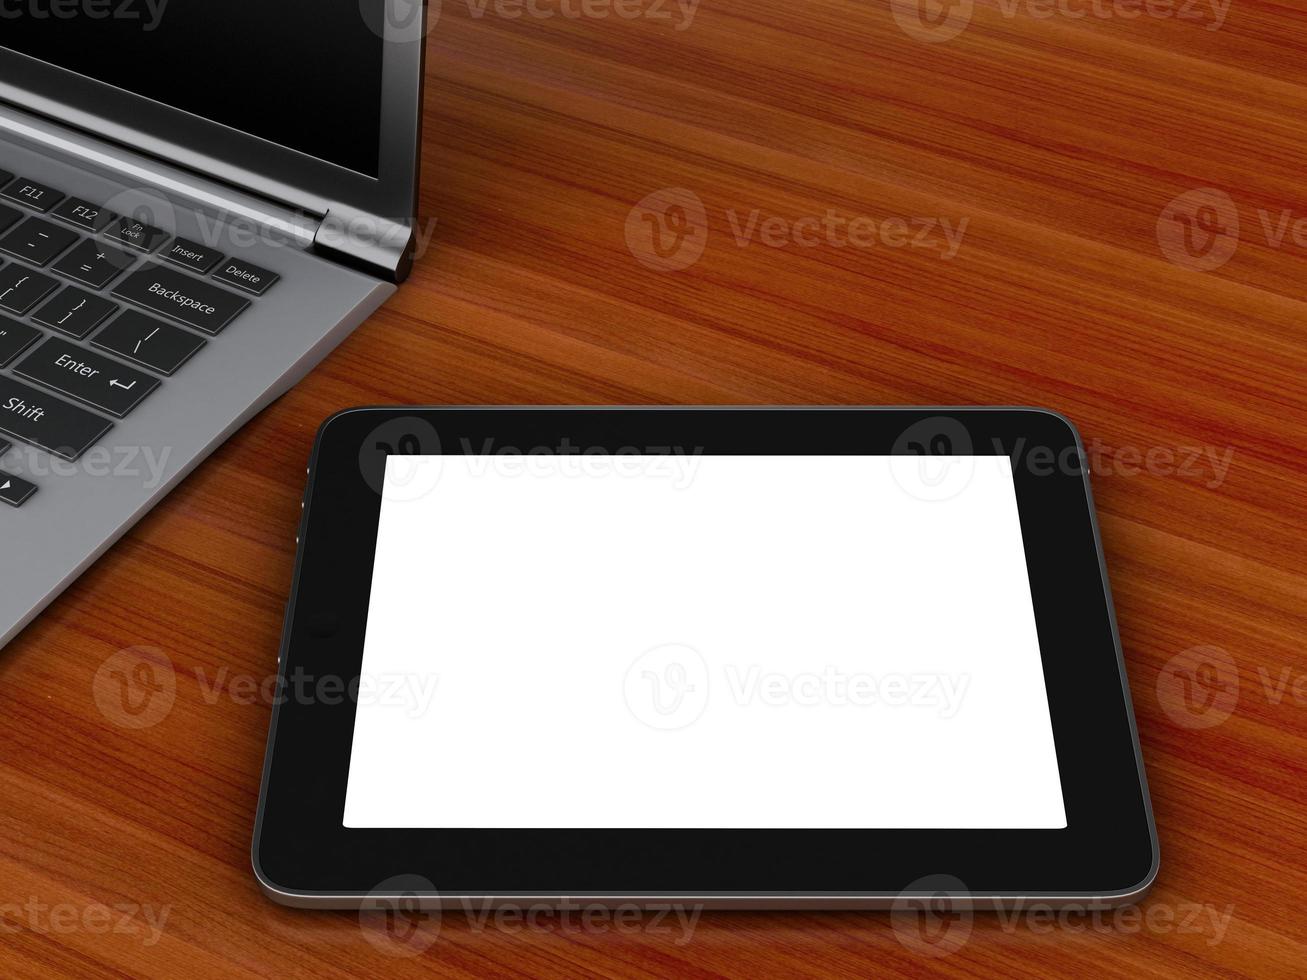 Arbeitsplatz mit digitalem Tablet und Laptop PC. foto